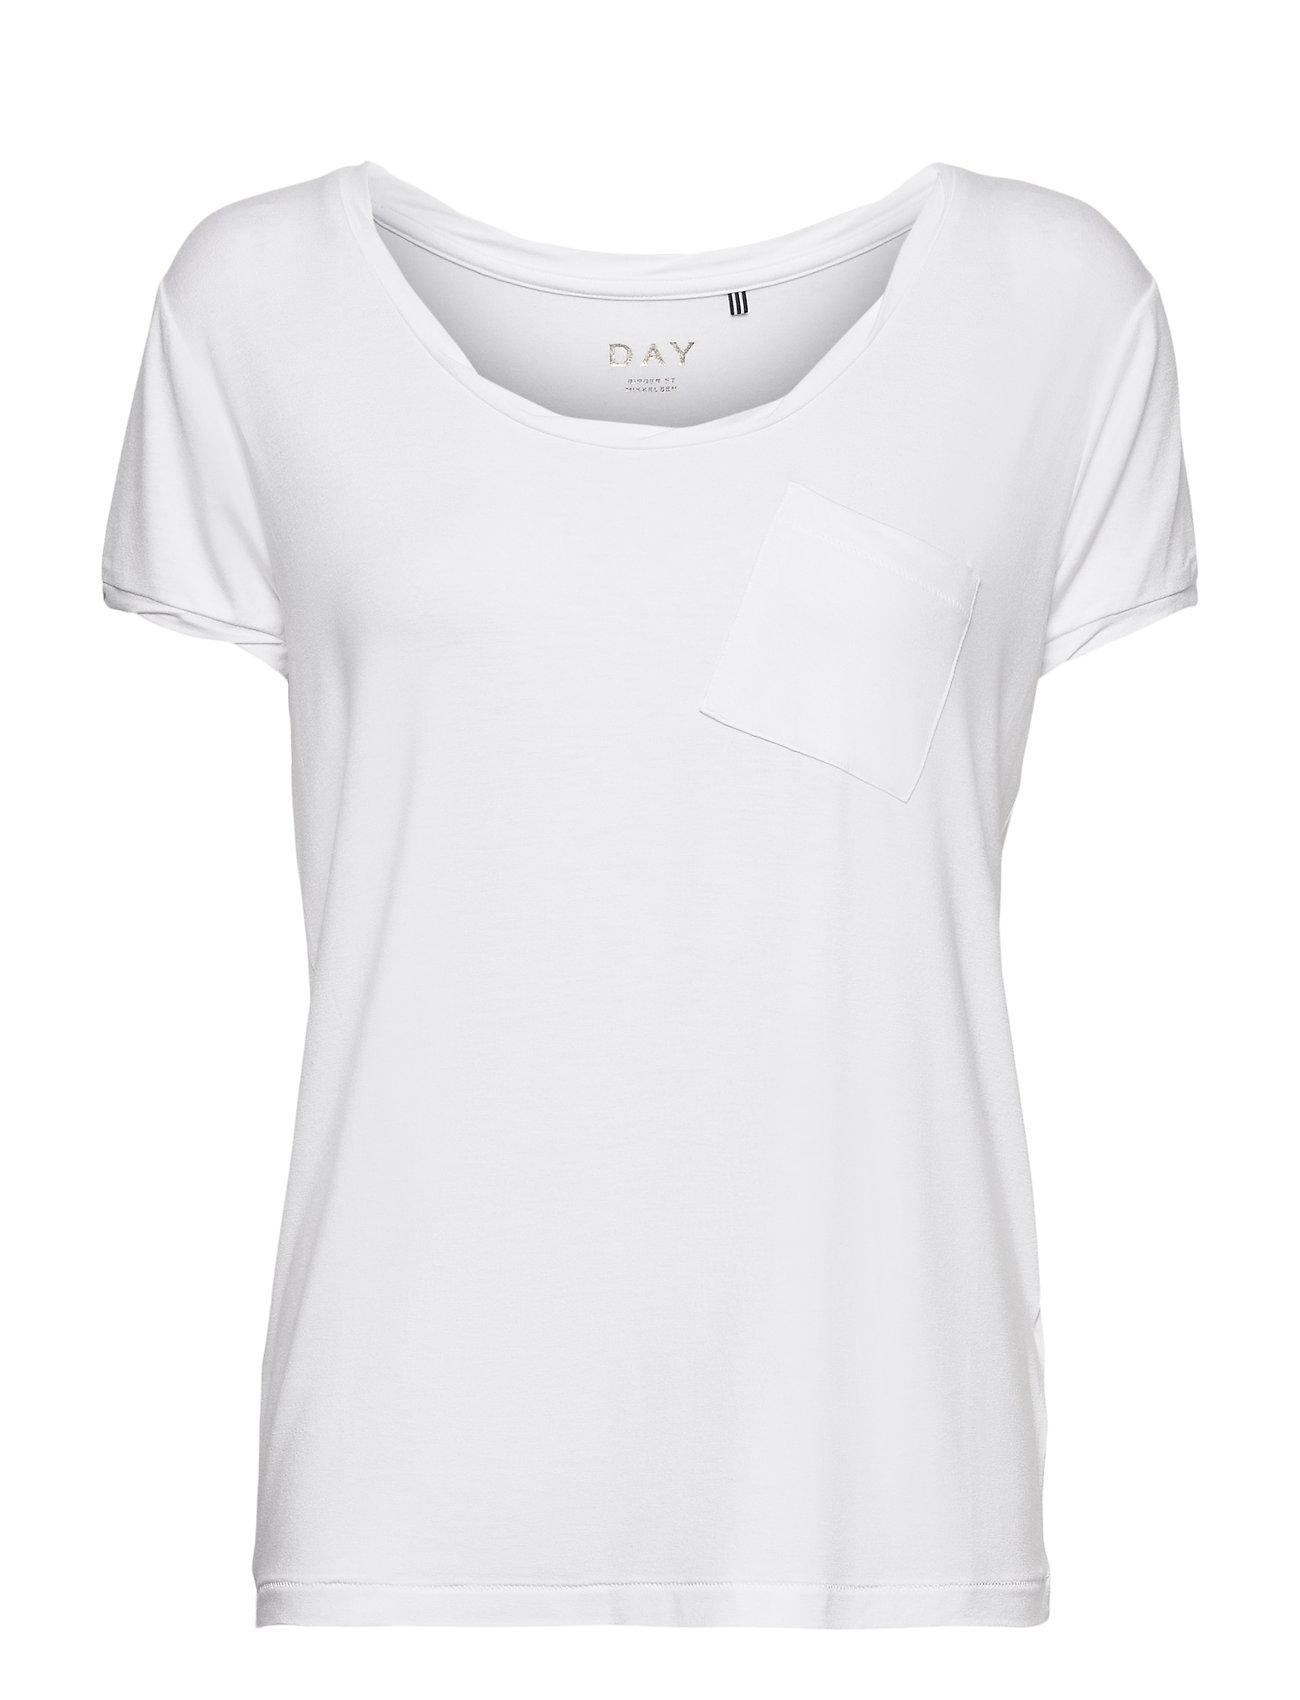 Day New Clean Twist T-shirts & Tops Short-sleeved Valkoinen Day Birger Et Mikkelsen, Day Birger et Mikkelsen